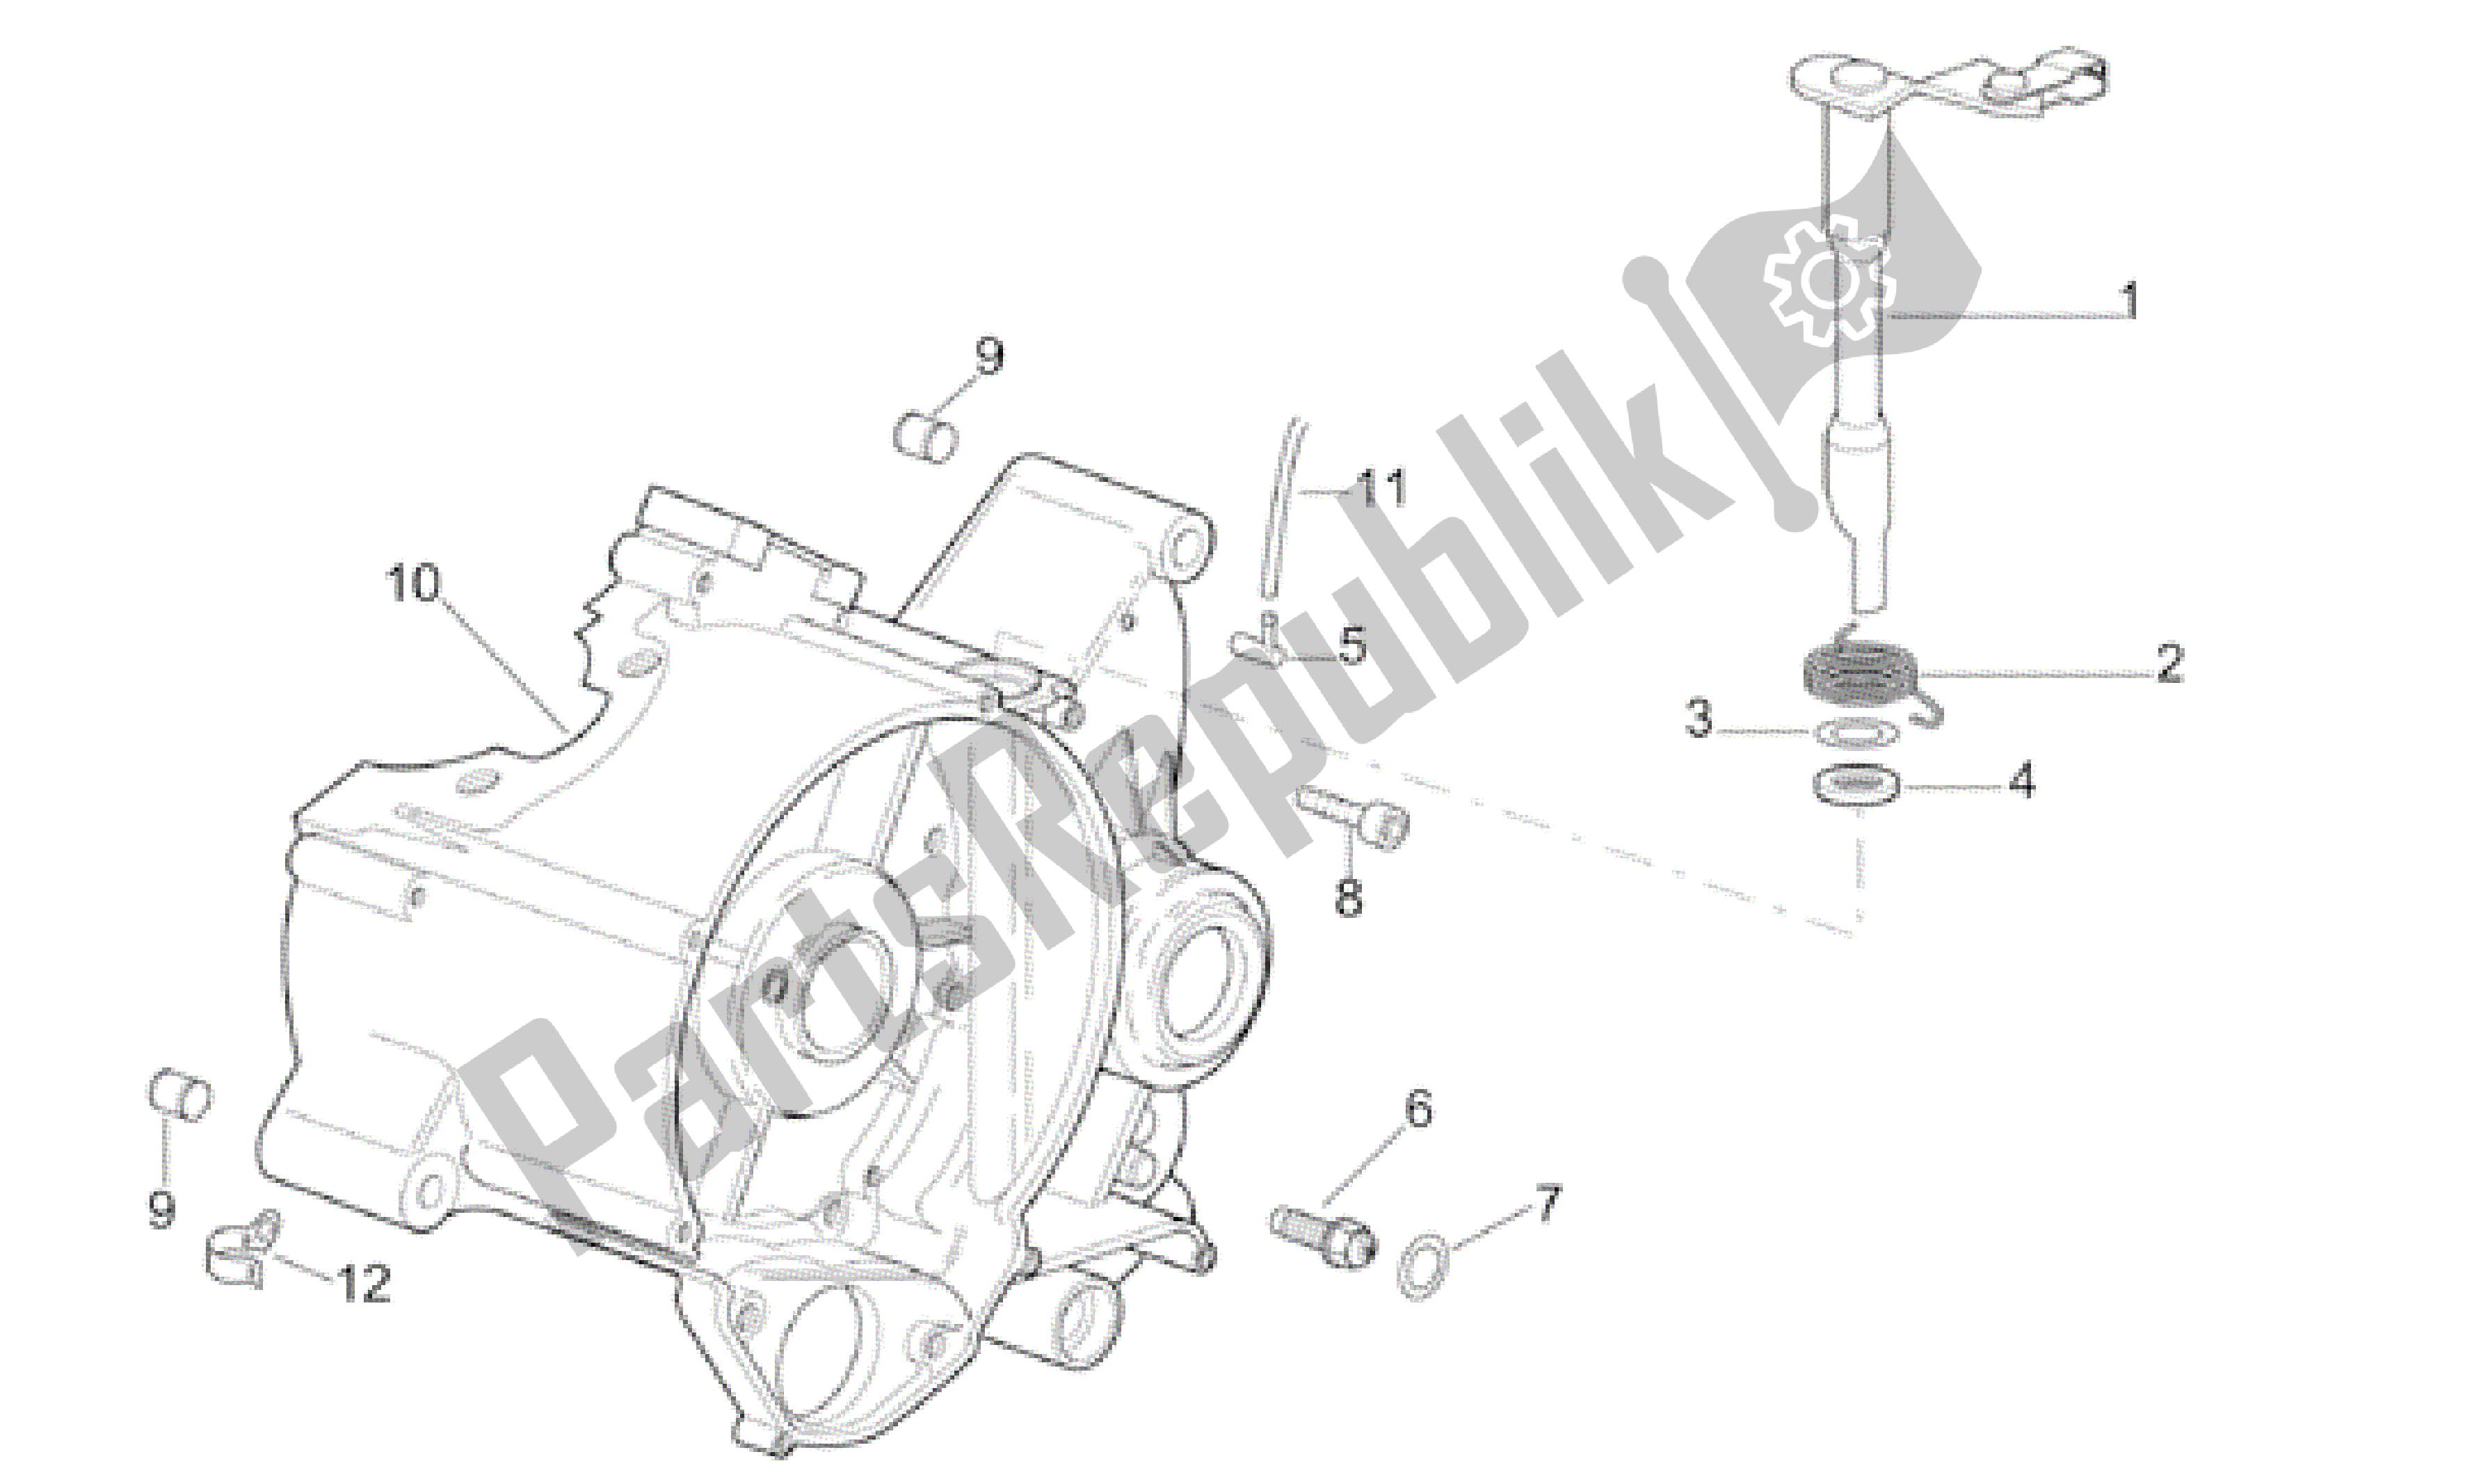 All parts for the Right Crankcase of the Aprilia RS 50 1999 - 2005